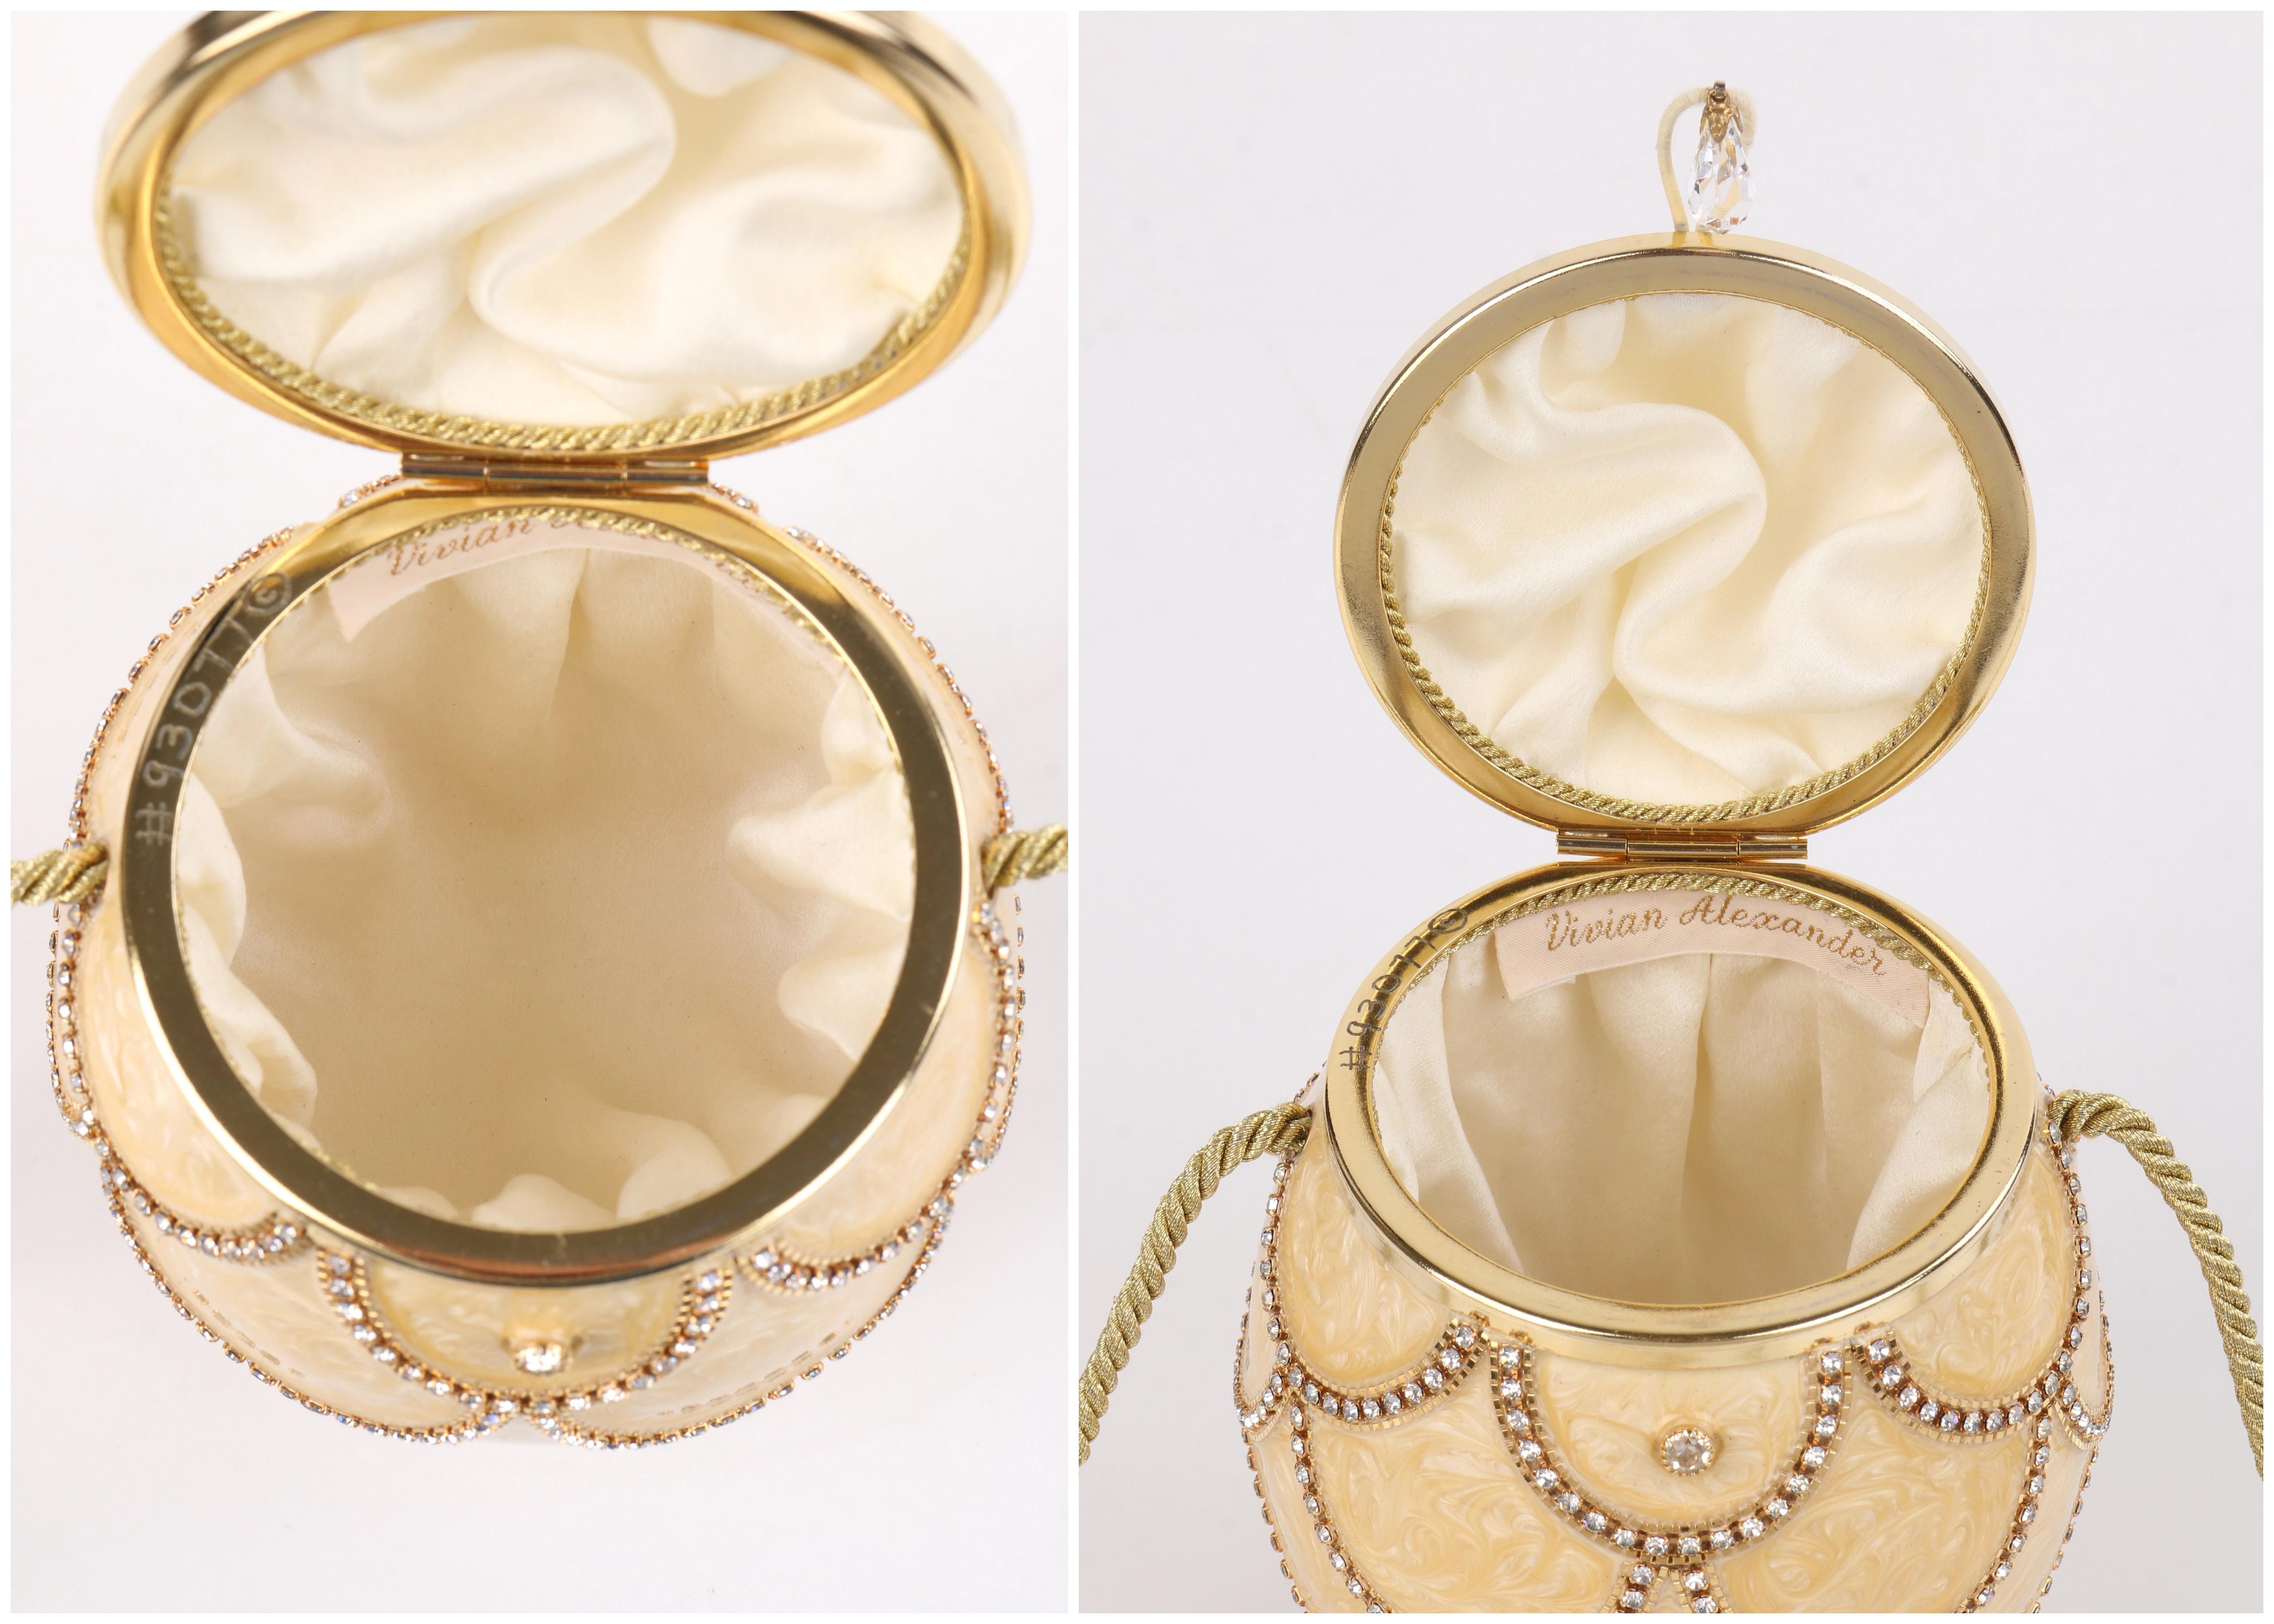 VIVIAN ALEXANDER c.1994 Gold Crystal Handmade Faberge Egg Minaudiére Purse 1